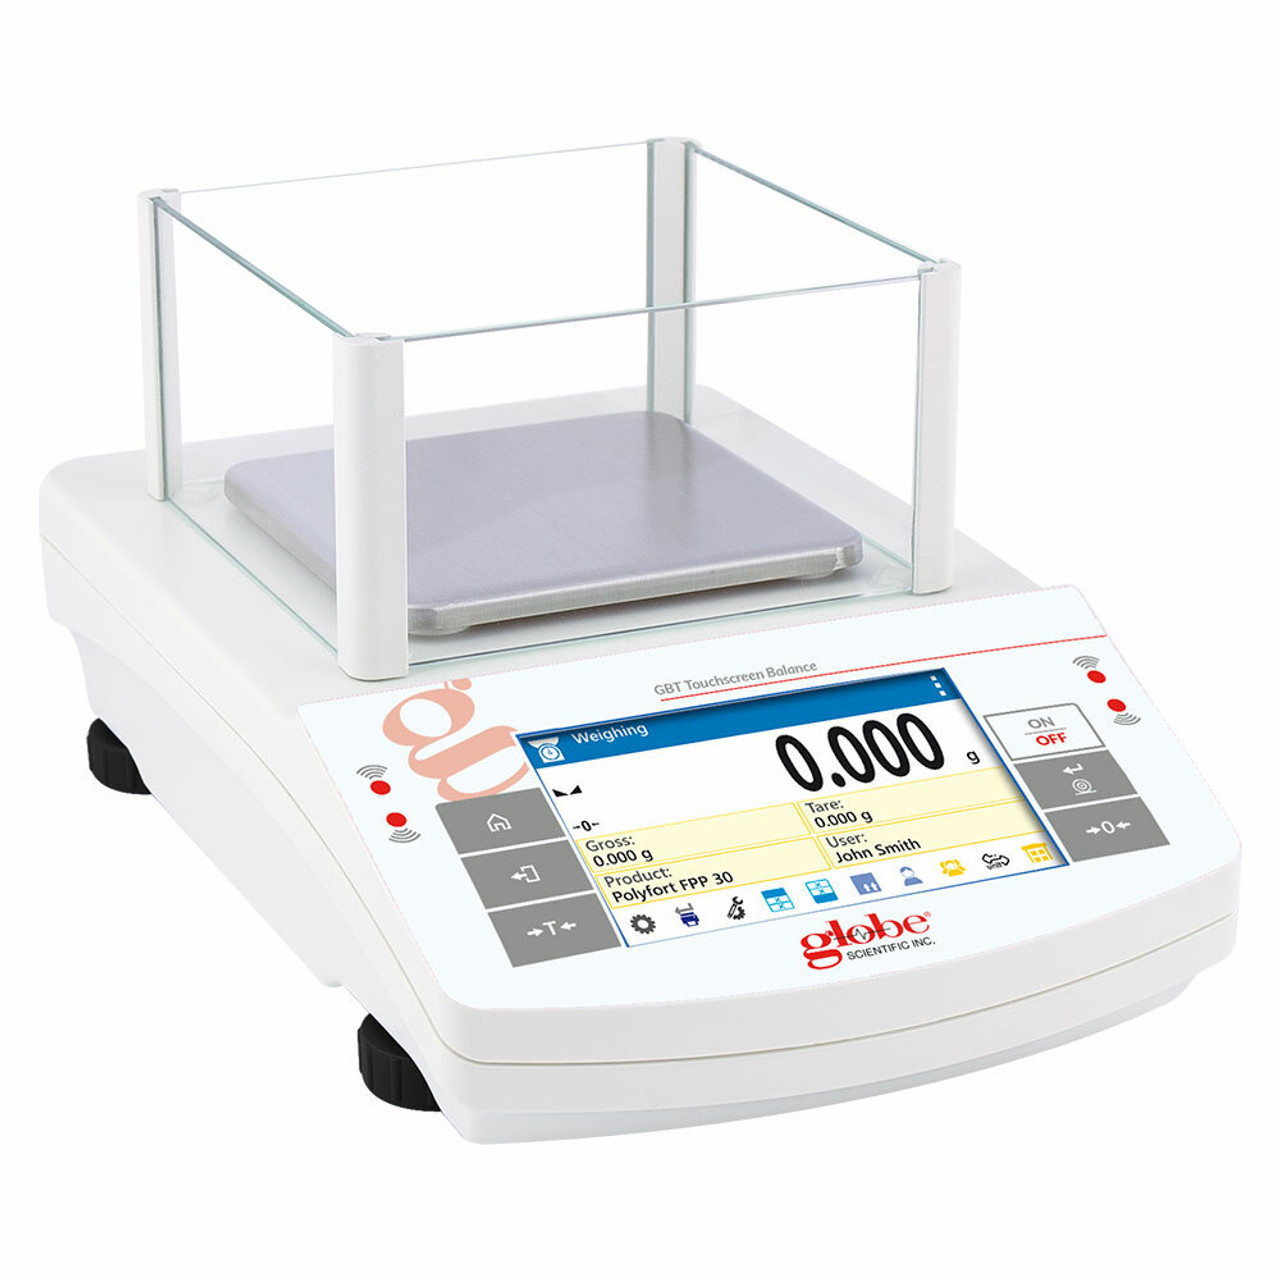 Digital Lab Weight Scale - Analytical Balance 3000g X 0.001g